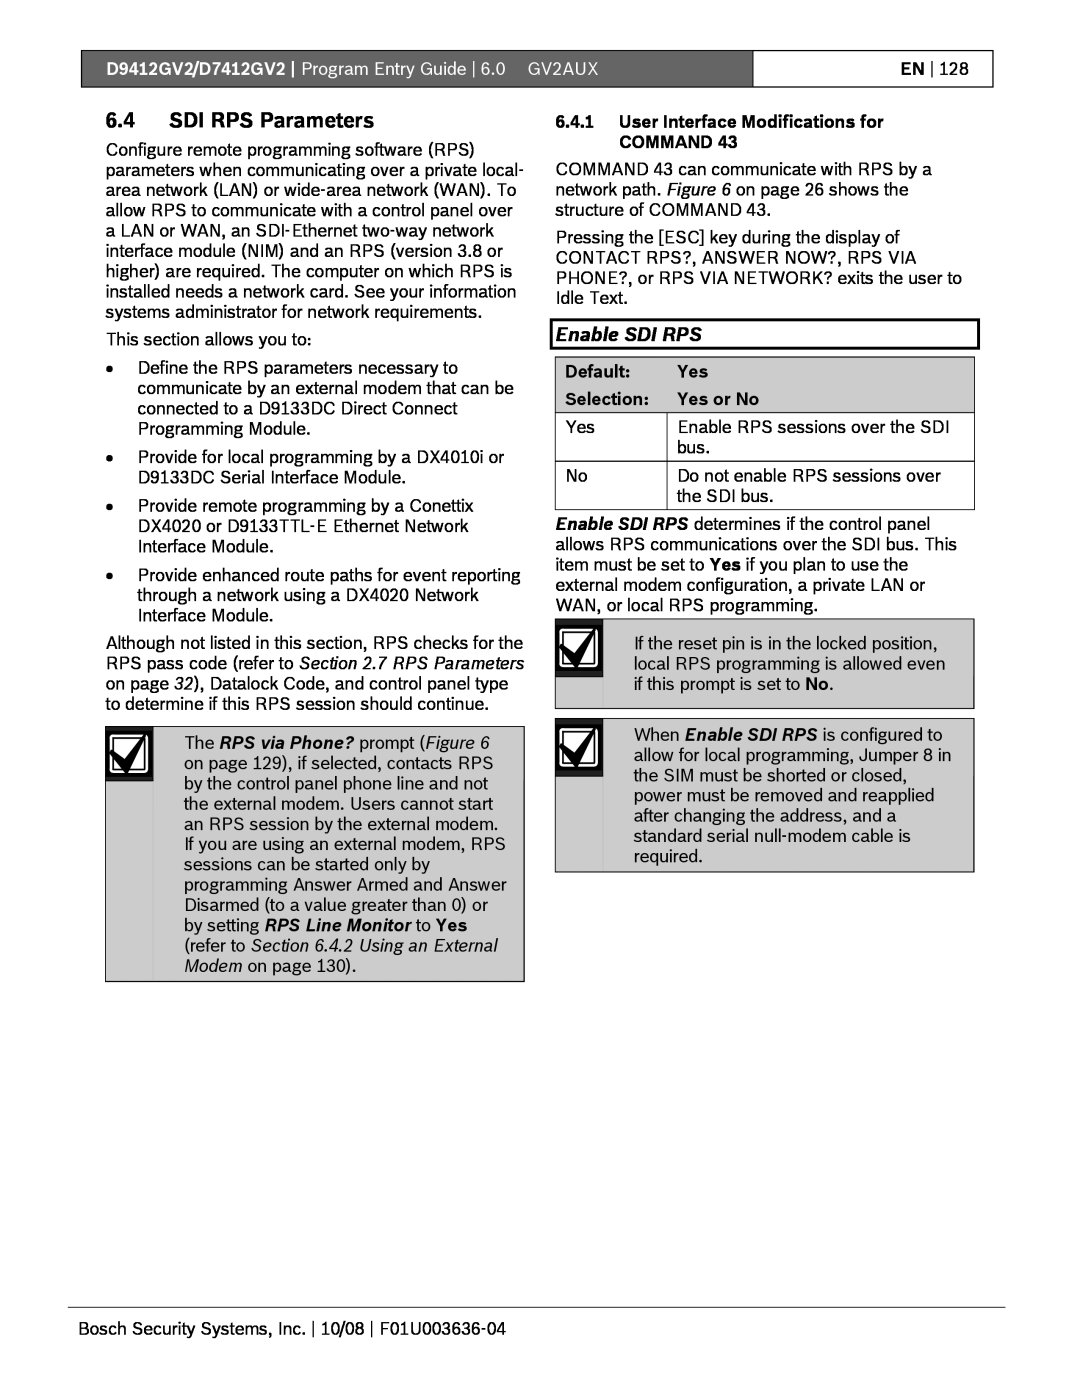 Bosch Appliances D9412GV2 manual 6.4SDI RPS Parameters, Enable SDI RPS 